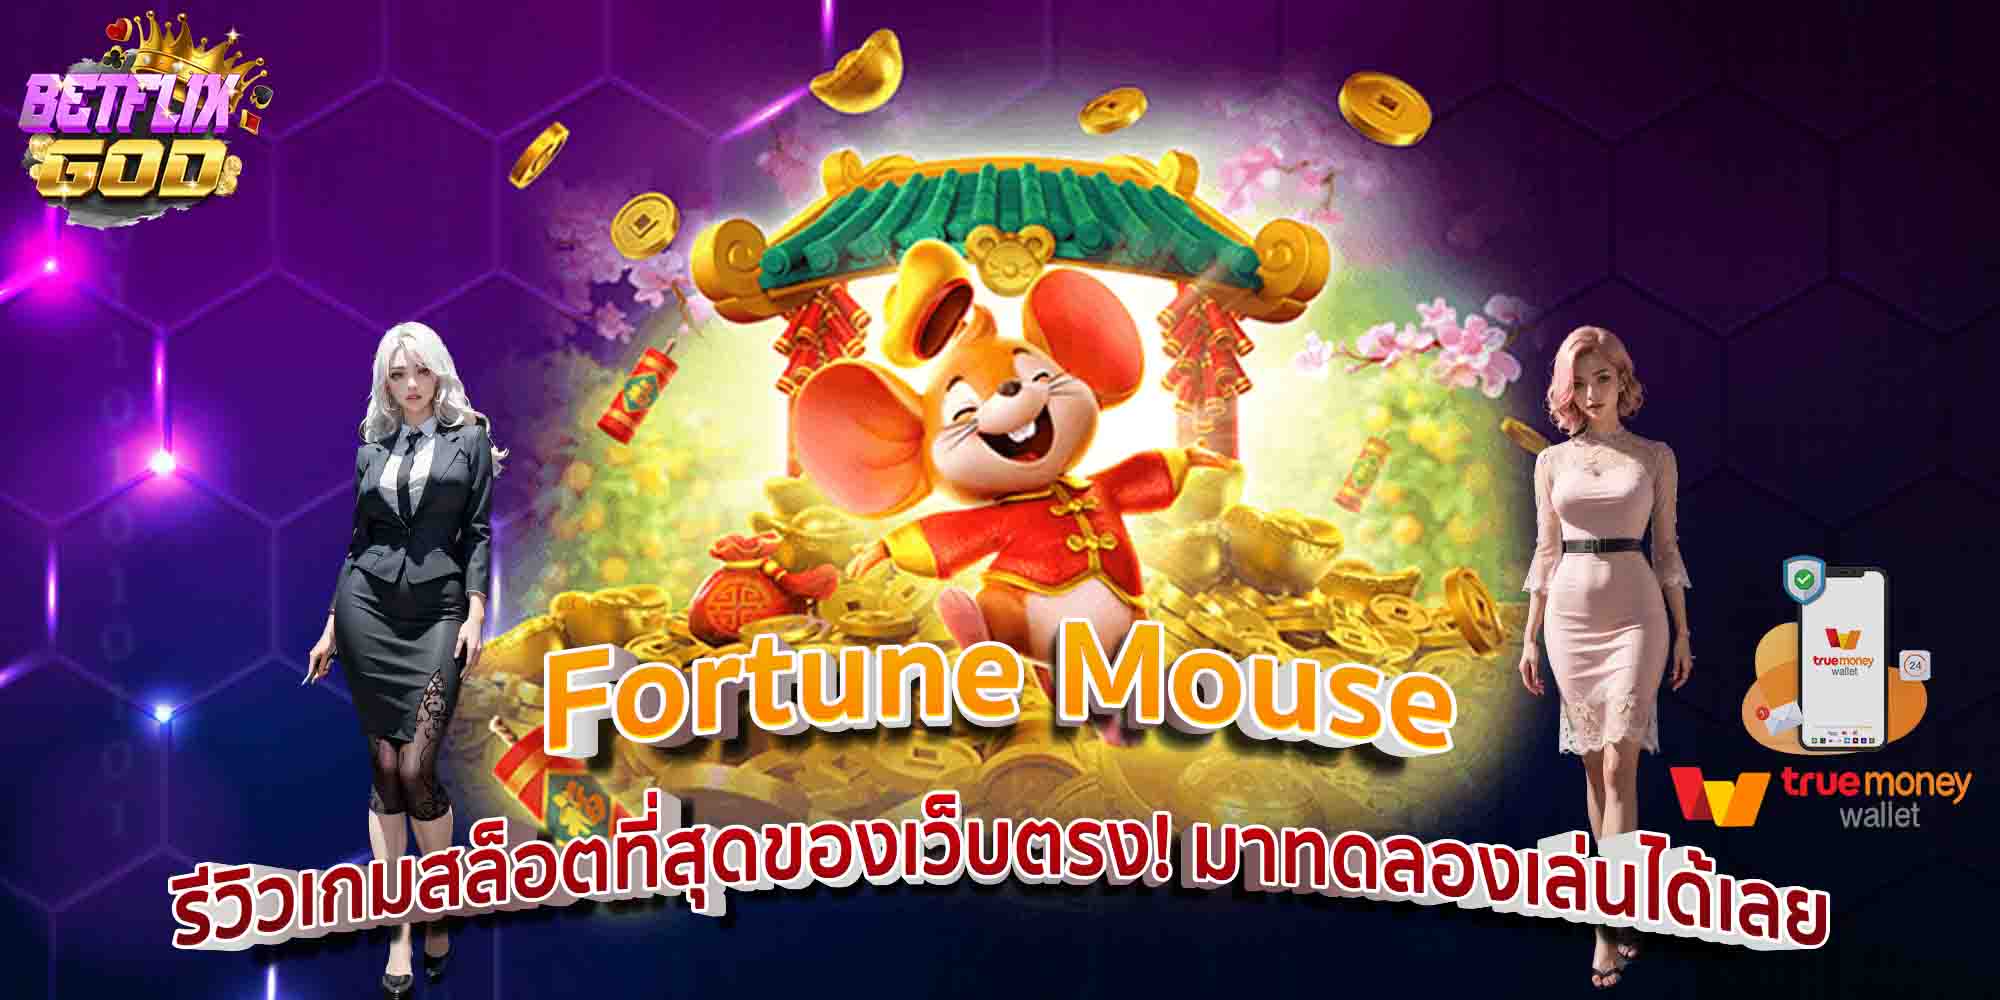 Fortune Mouse รีวิวเกมสล็อตที่สุดของเว็บตรง! มาทดลองเล่นได้เลย